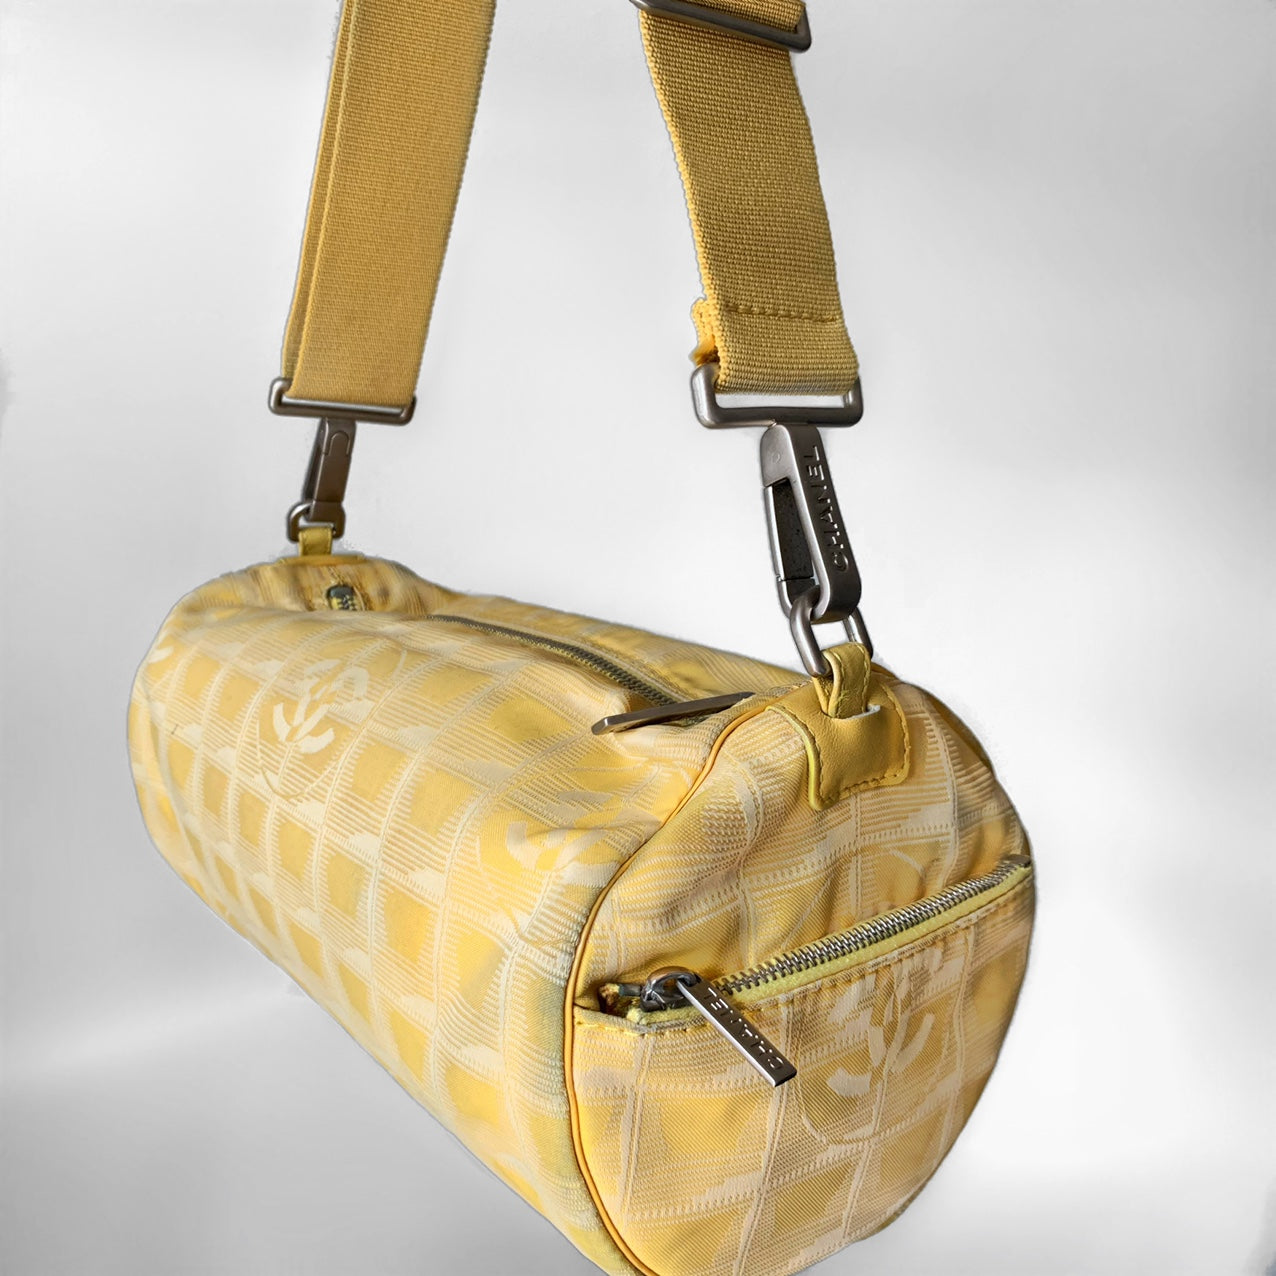 Chanel Travel Line Tote Bag CC - Vintage Handbag